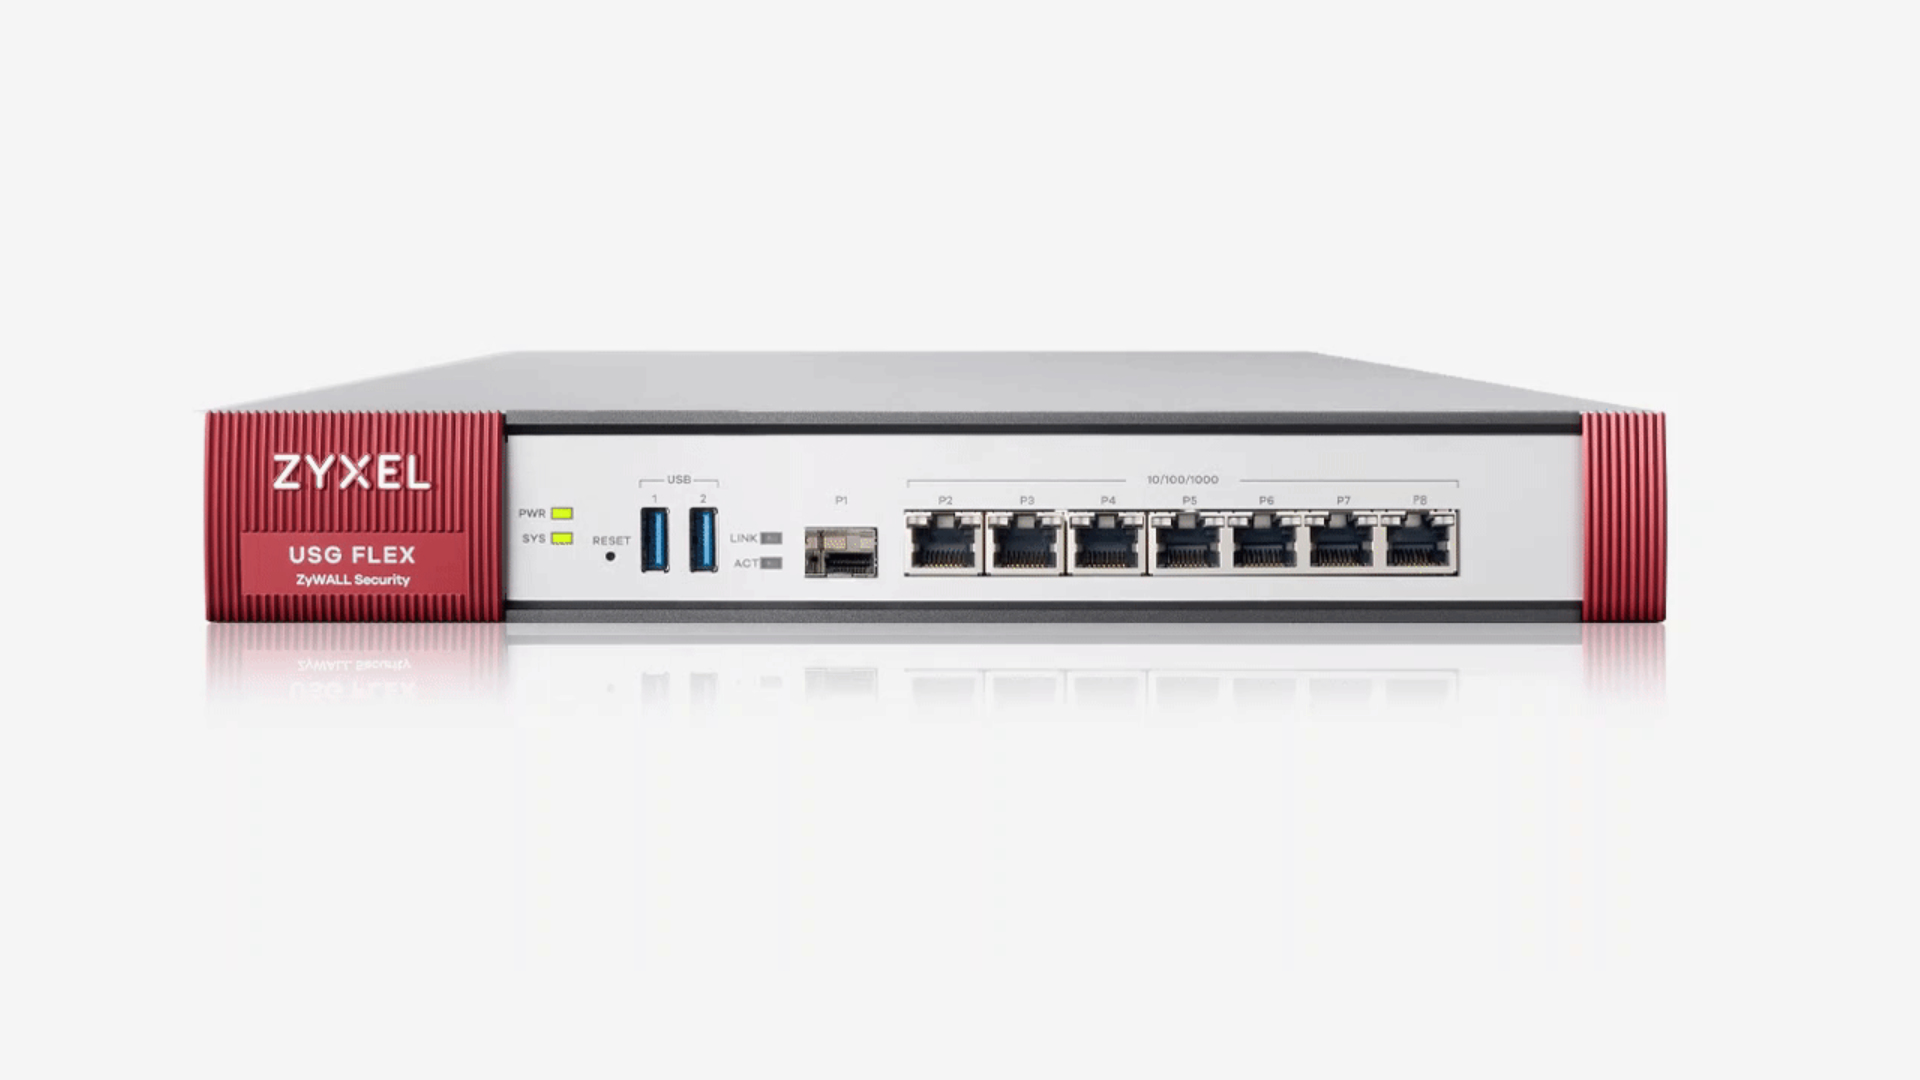 Zyxel USG Flex Firewall 10/100/1000 - 2WAN - 4 LAN/DMZ ports - 1 SFP - 2 USB with 1 Yr UTM bundle